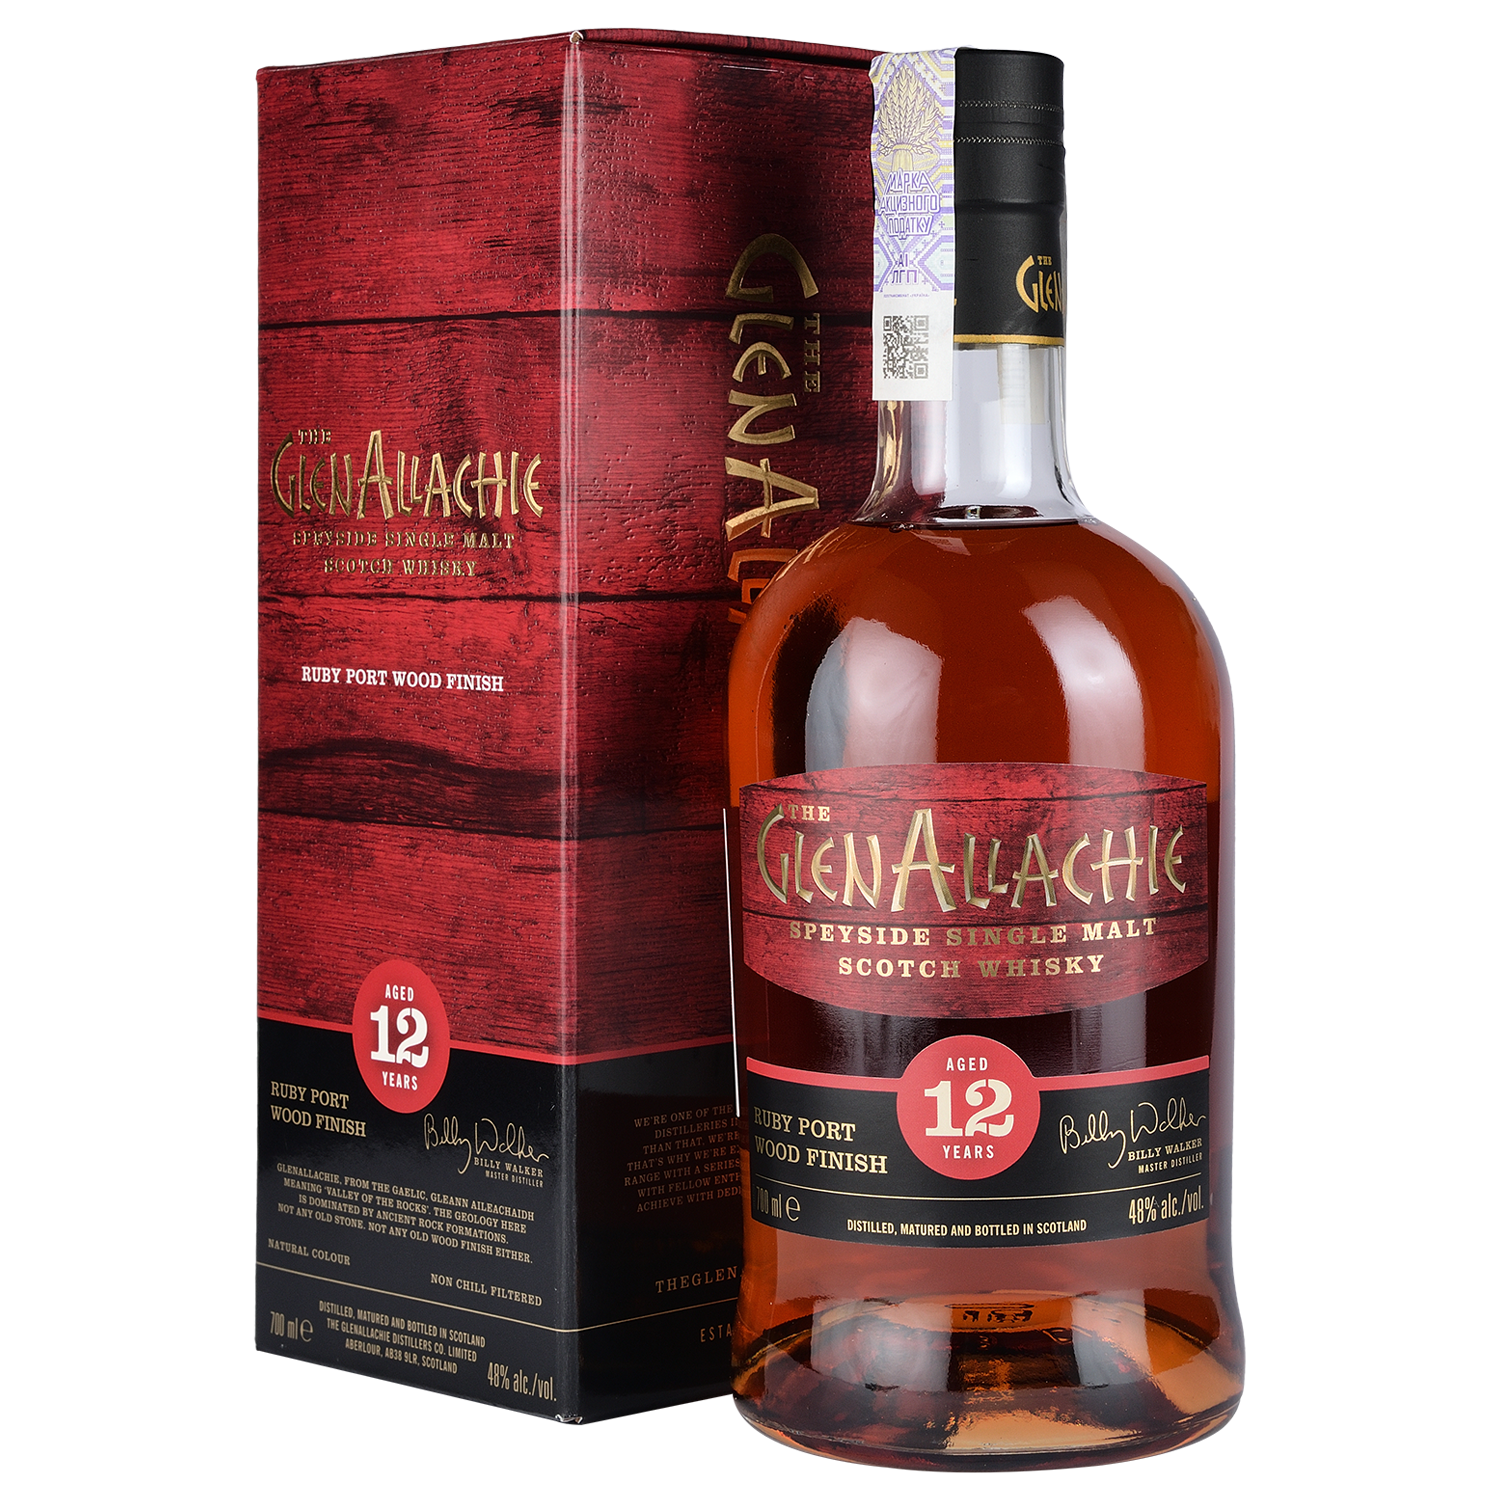 Виски GlenAllachie Single Malt Scotch Whisky Ruby Port Wood Finish 12 yo, в подарочной упаковке, 48%, 0,7 л - фото 1